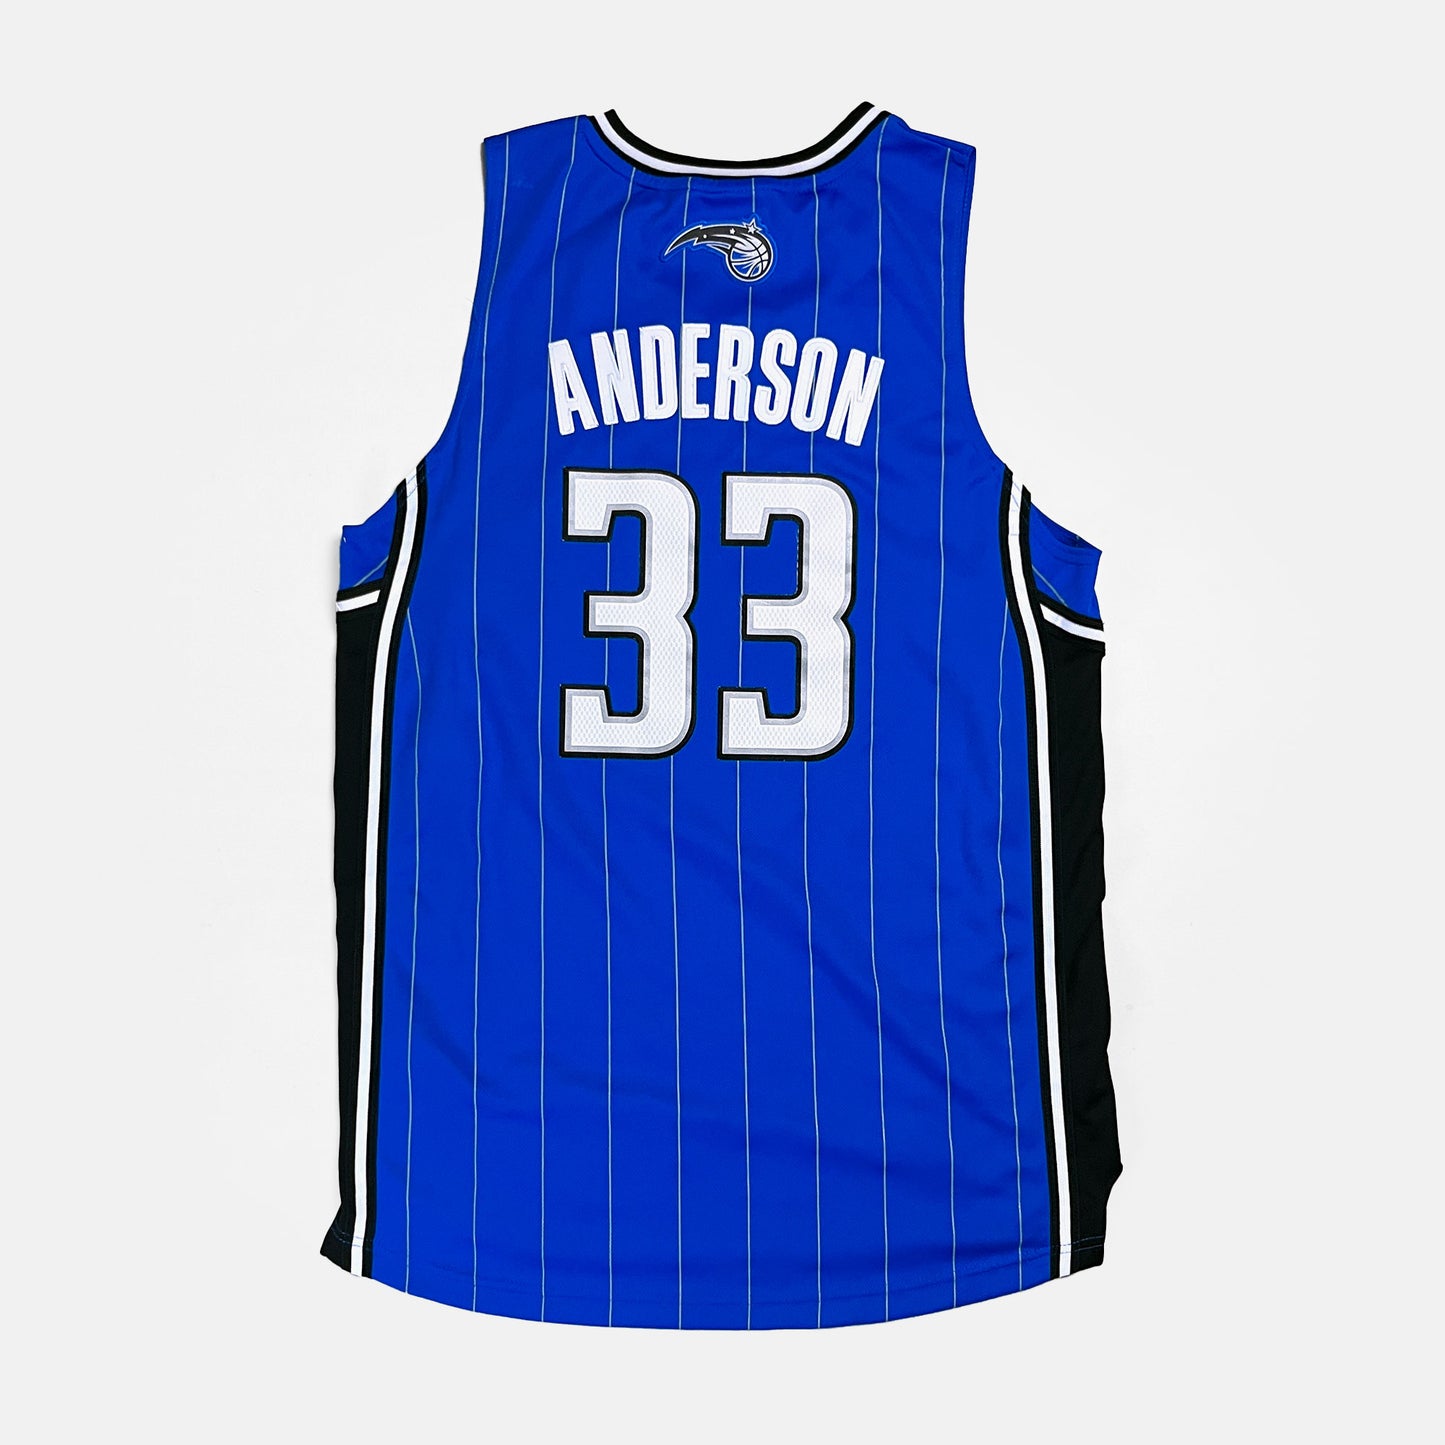 Orlando Magic - Ryan Anderson - Größe S - Adidas - NBA Trikot